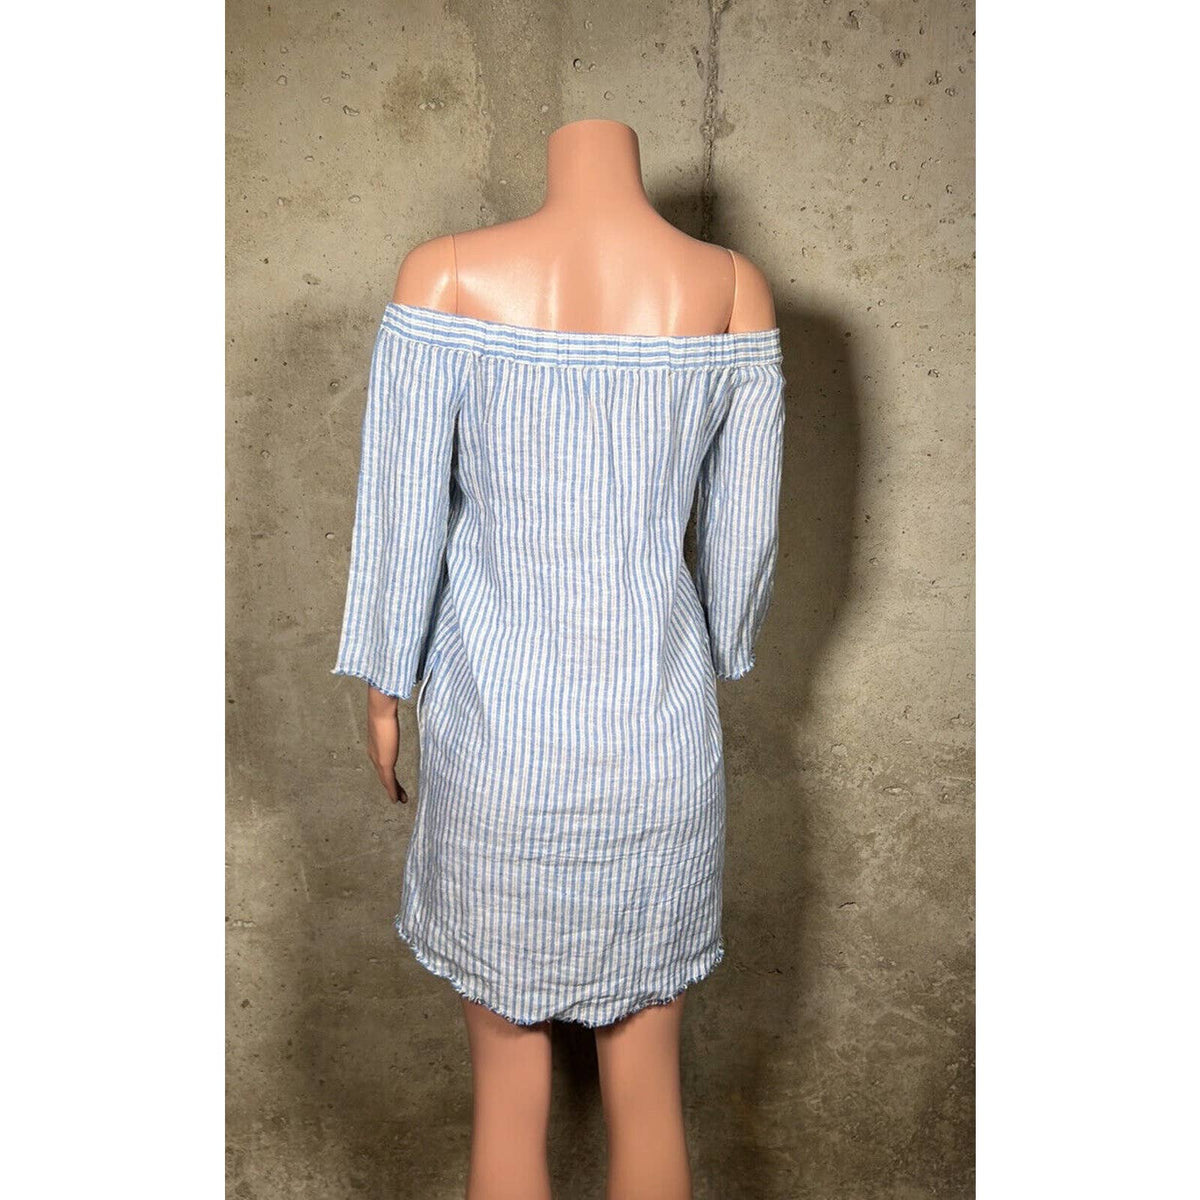 Tibi 100% Linen Blue Striped Dress Sz.2